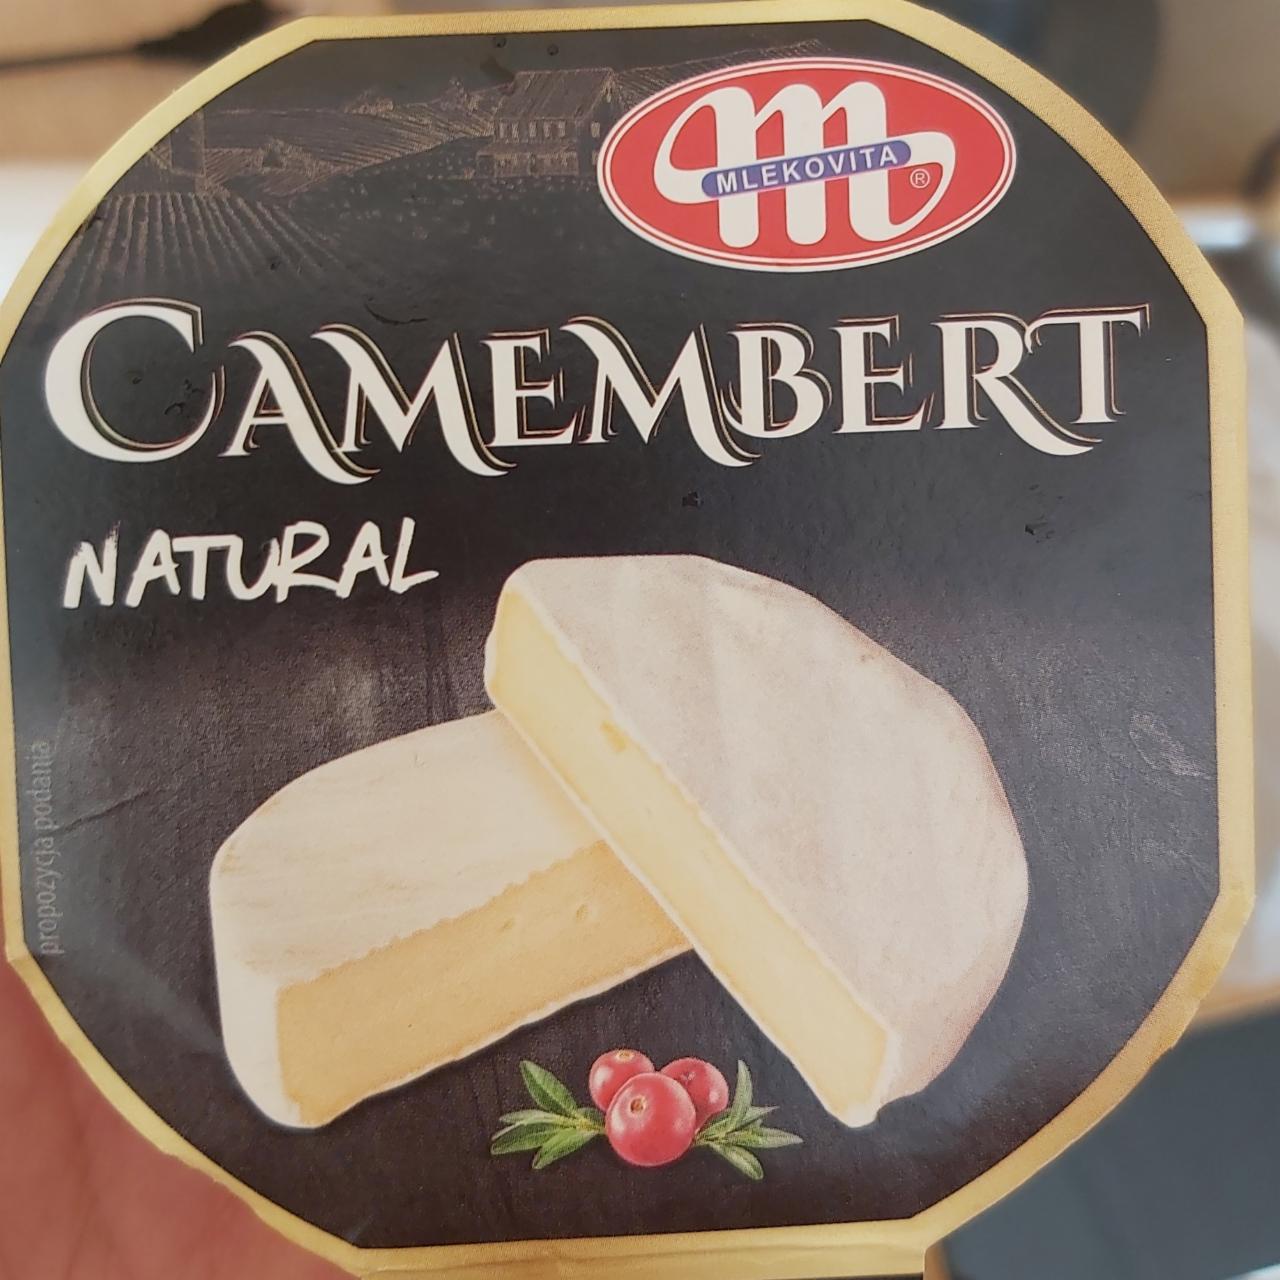 Zdjęcia - Ser Camembert Blue Cheese Grill La Polle Mlekovita